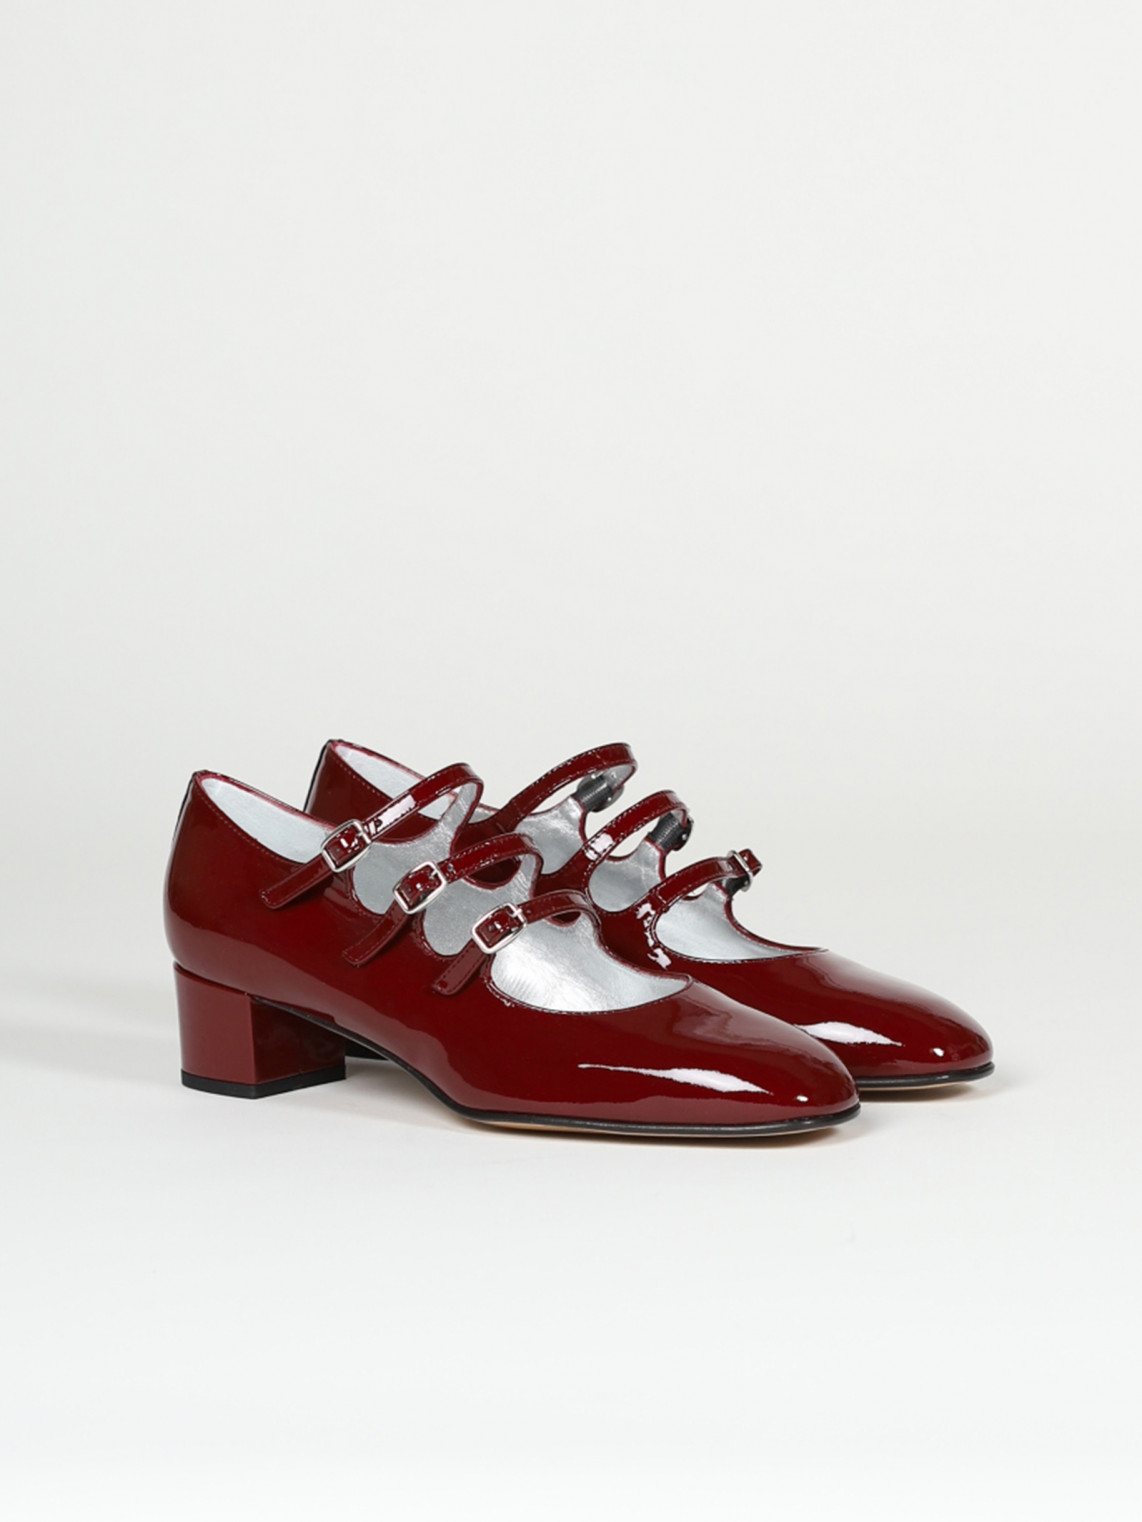 KINA burgundy patent leather mary janes | Carel Paris Shoes